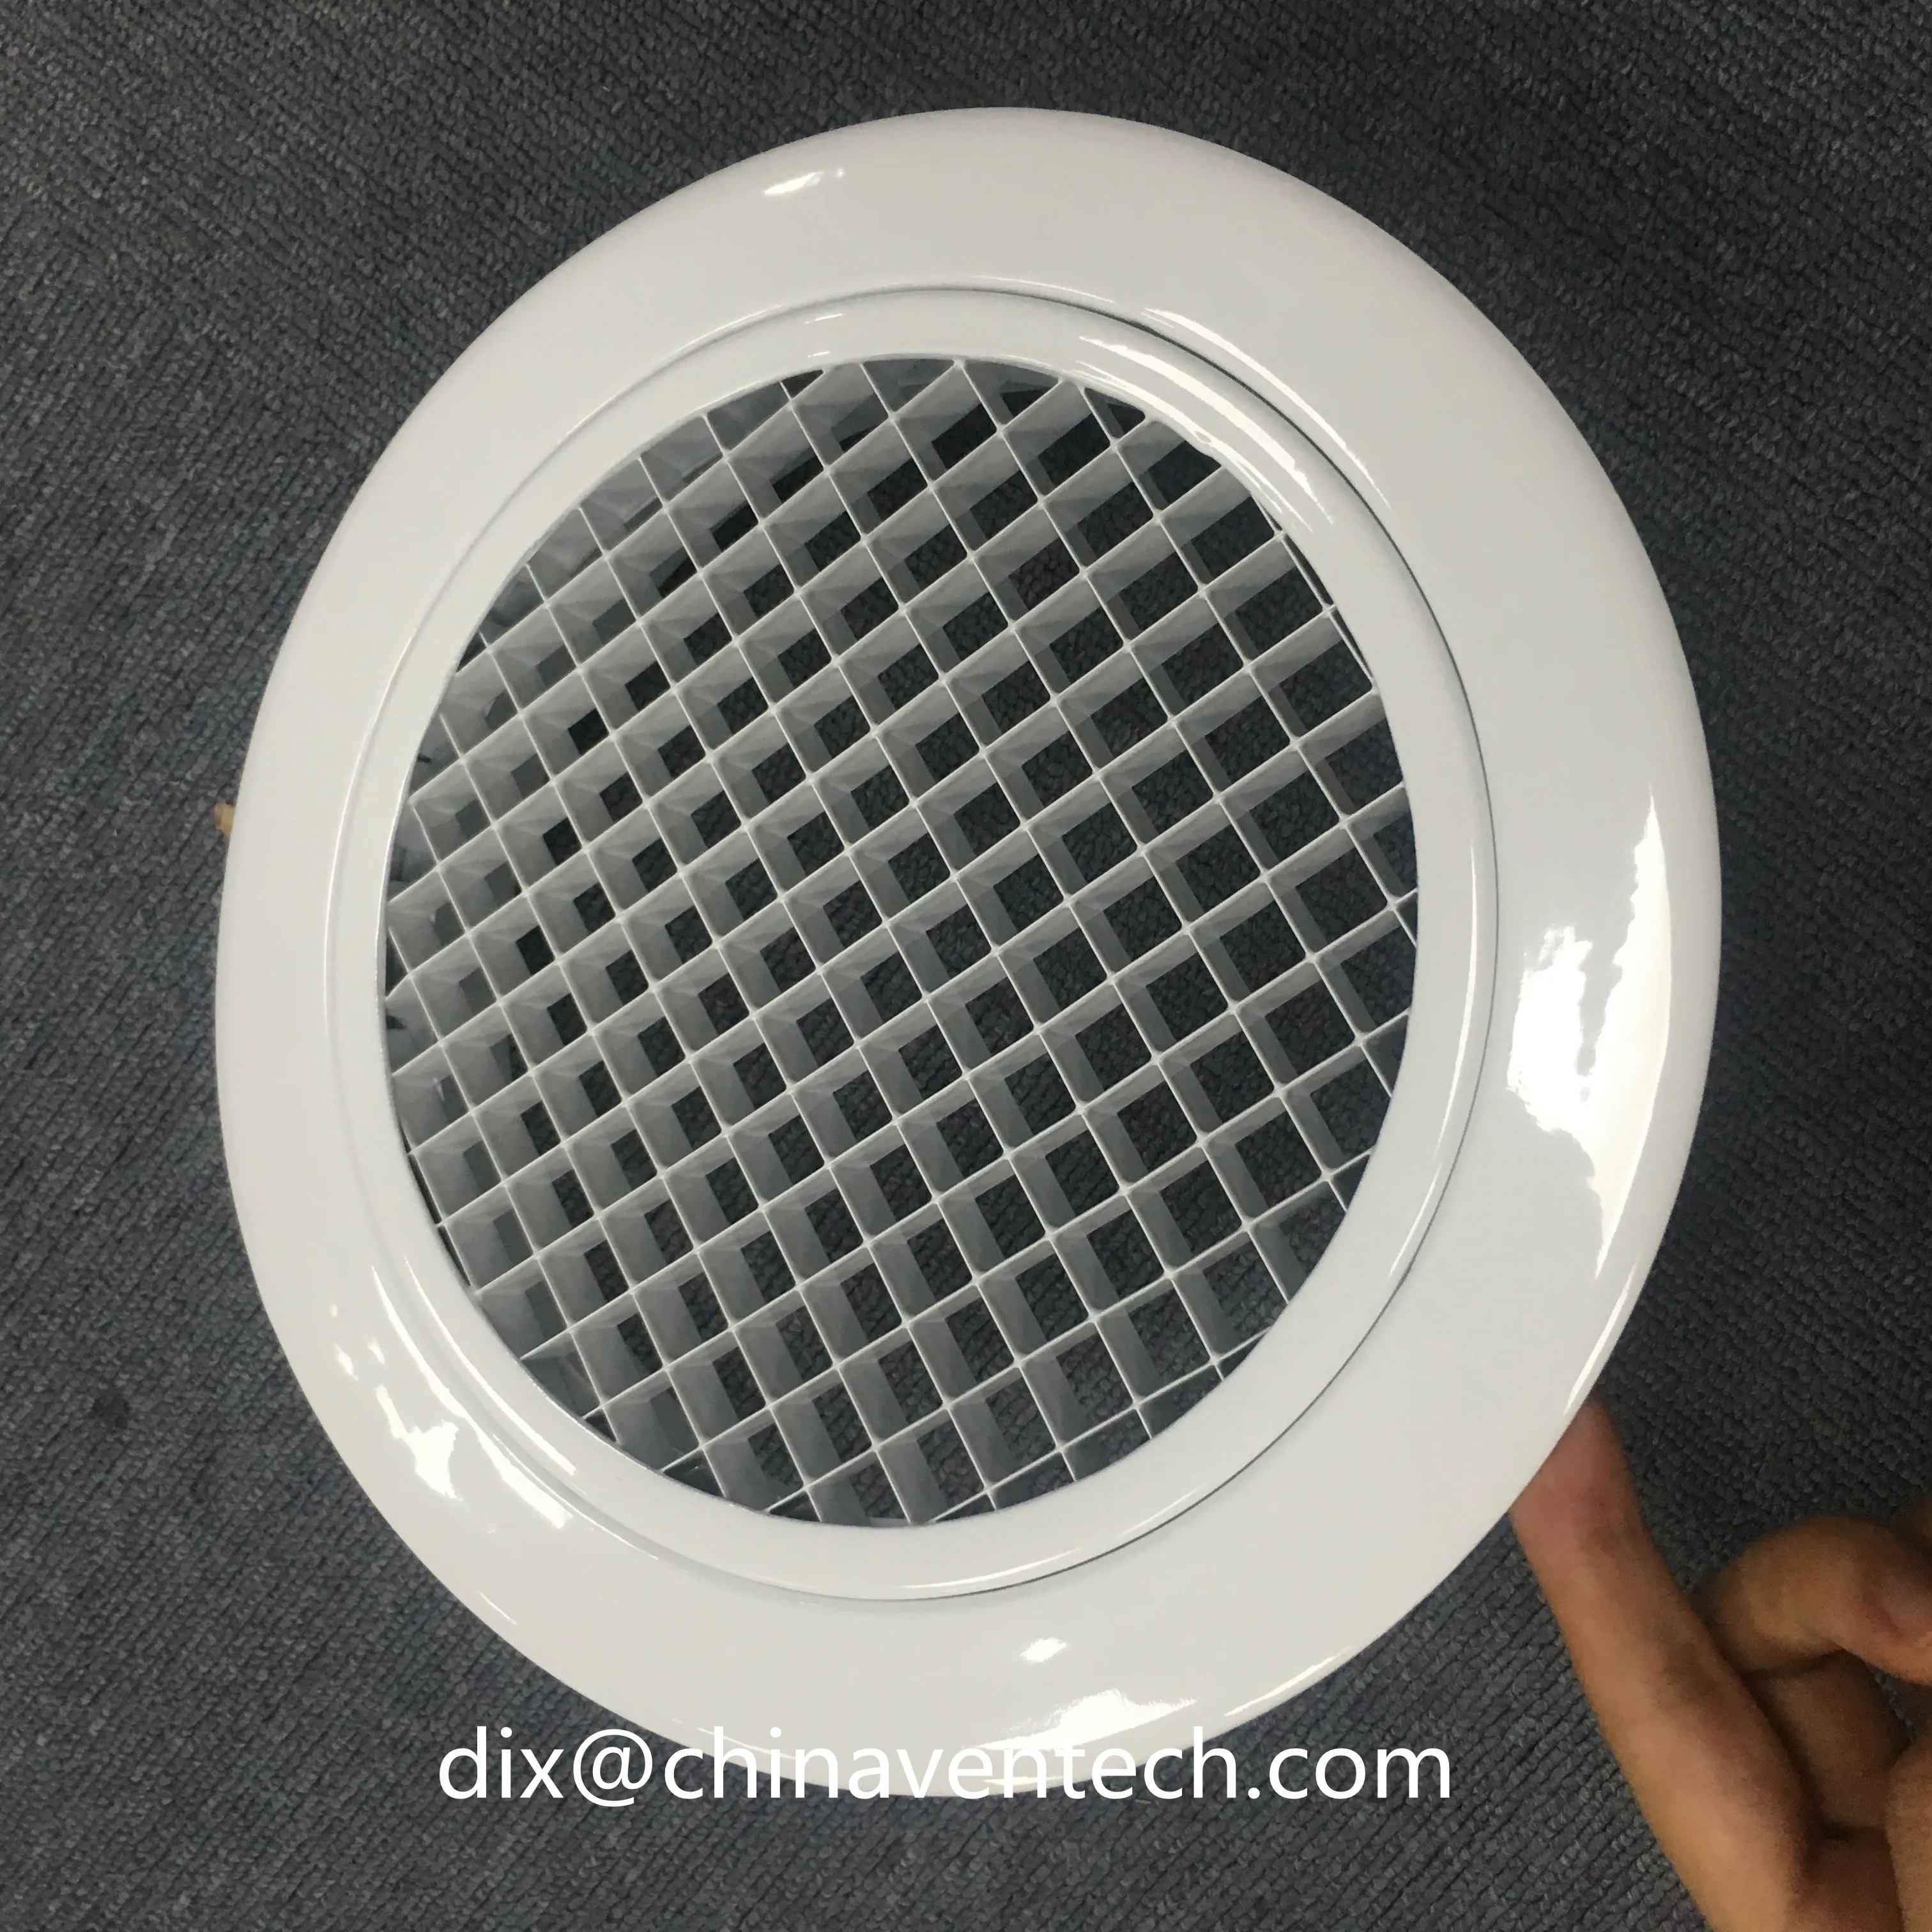 Hvac ceiling ventilation air duct work egg crate air ventilation grilles